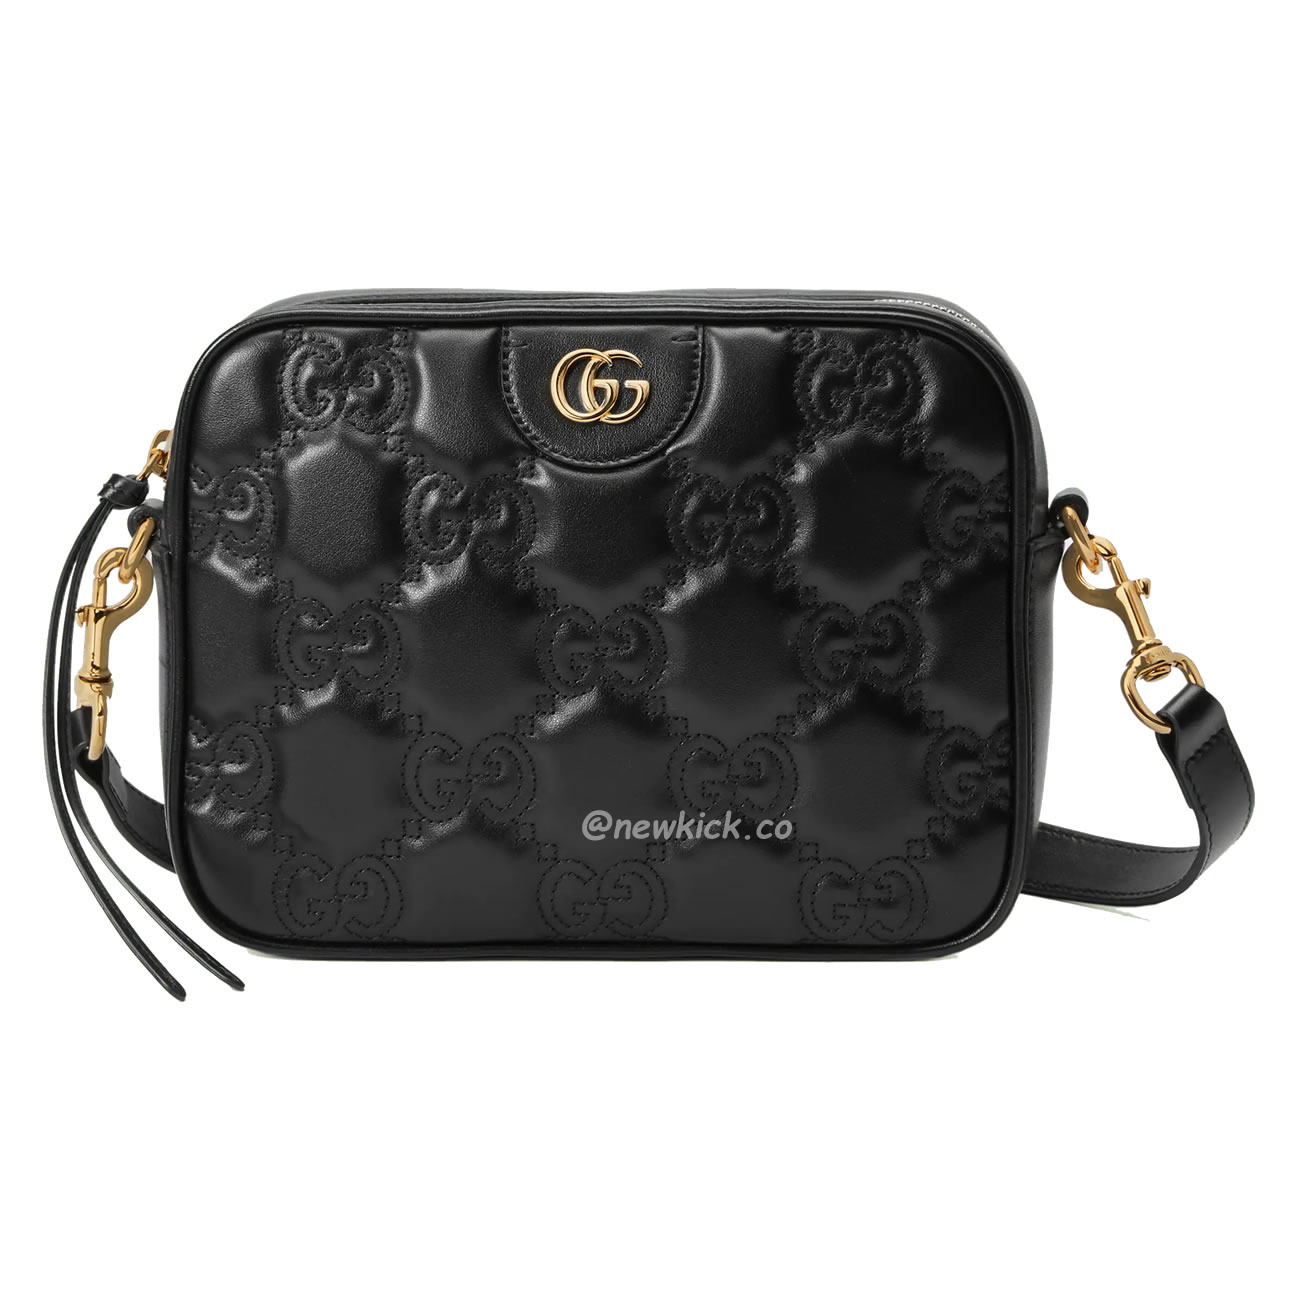 Gucci Gg Matelass Small Bag Product Details 702234 Um8hg 1046 (6) - newkick.org